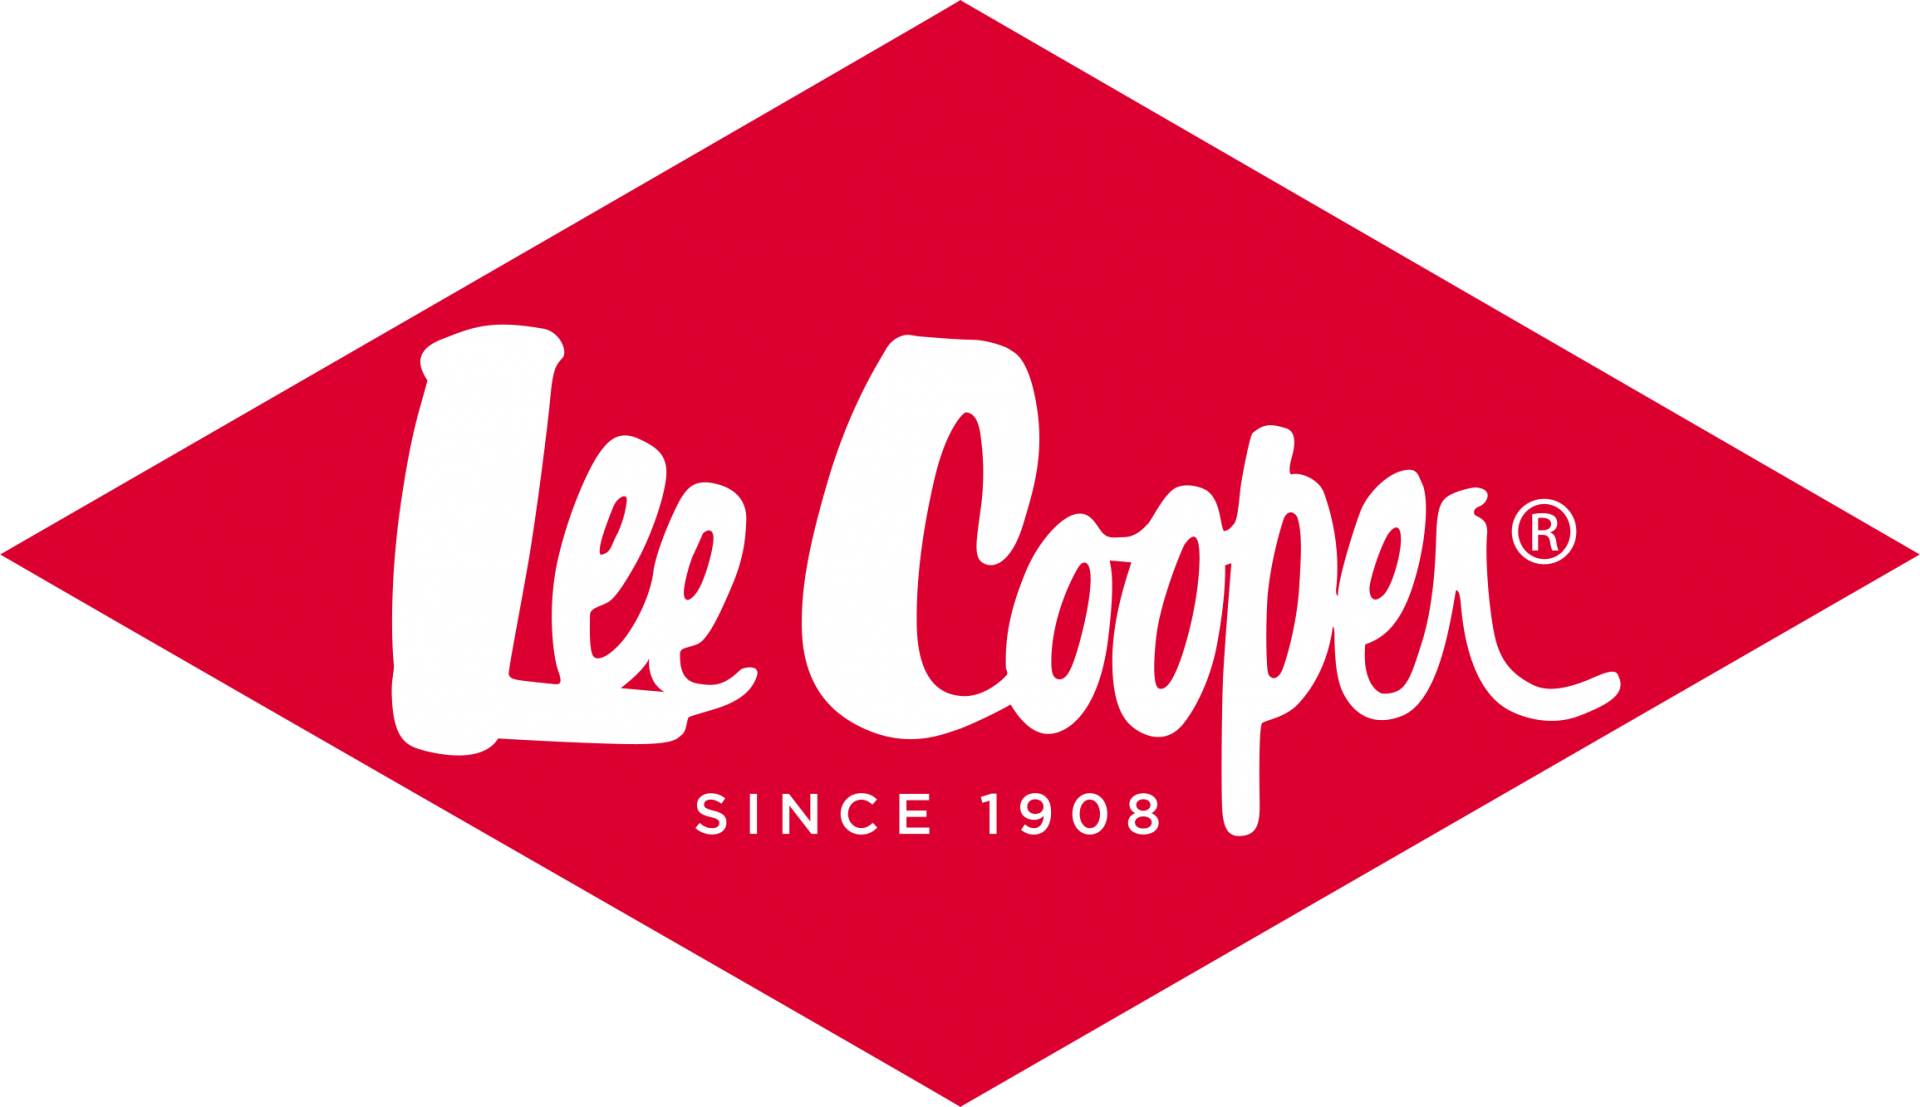 Lee cooper since 1908